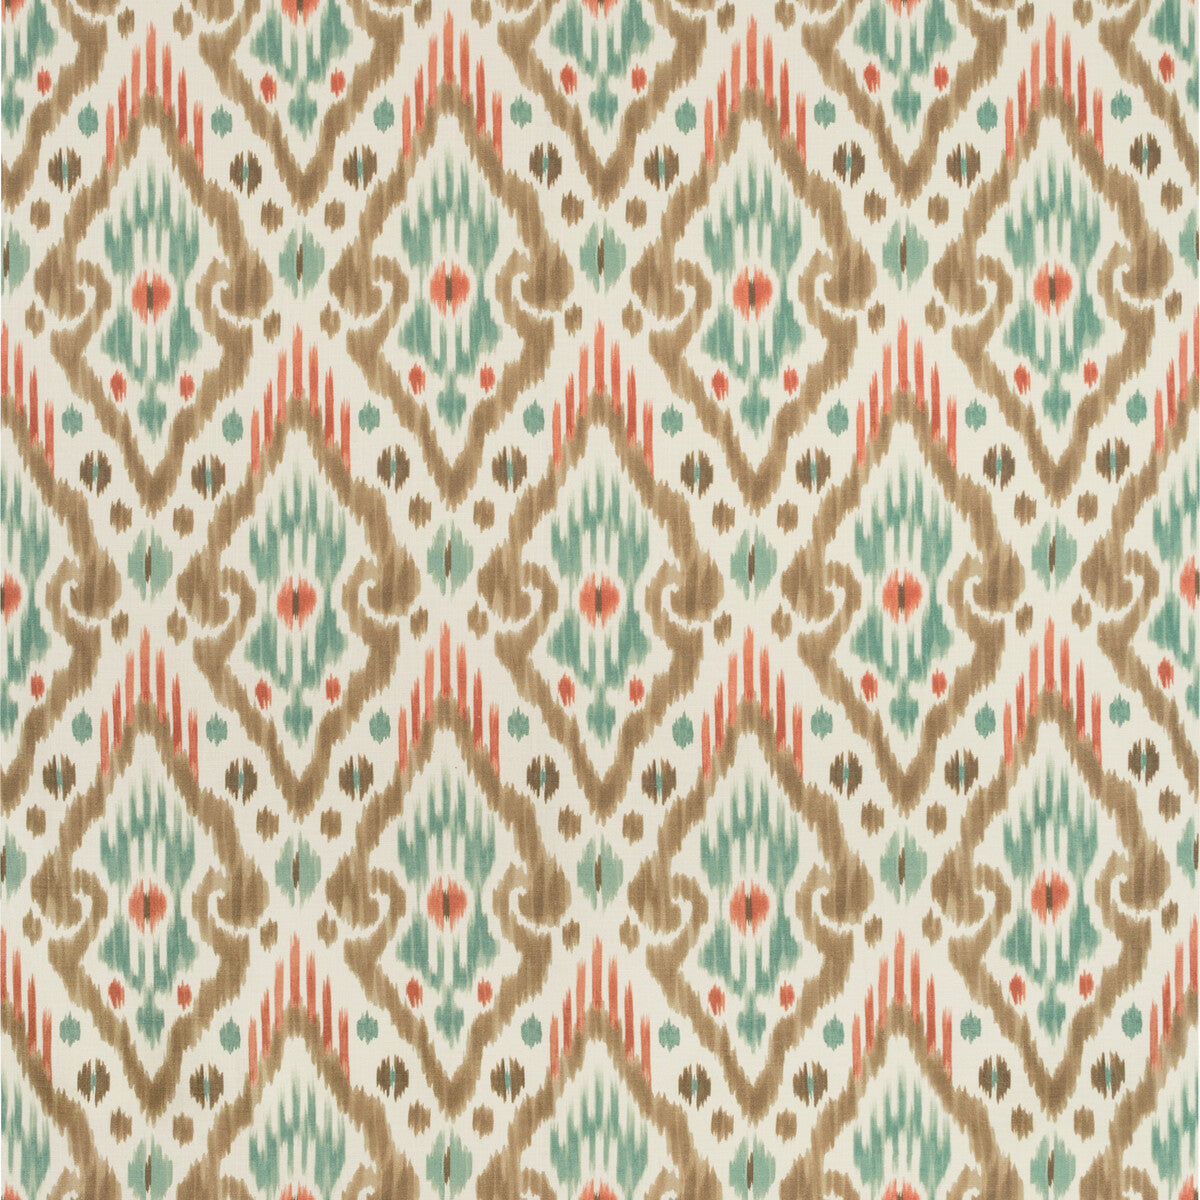 Kravet Basics fabric in conquet-312 color - pattern CONQUET.312.0 - by Kravet Basics